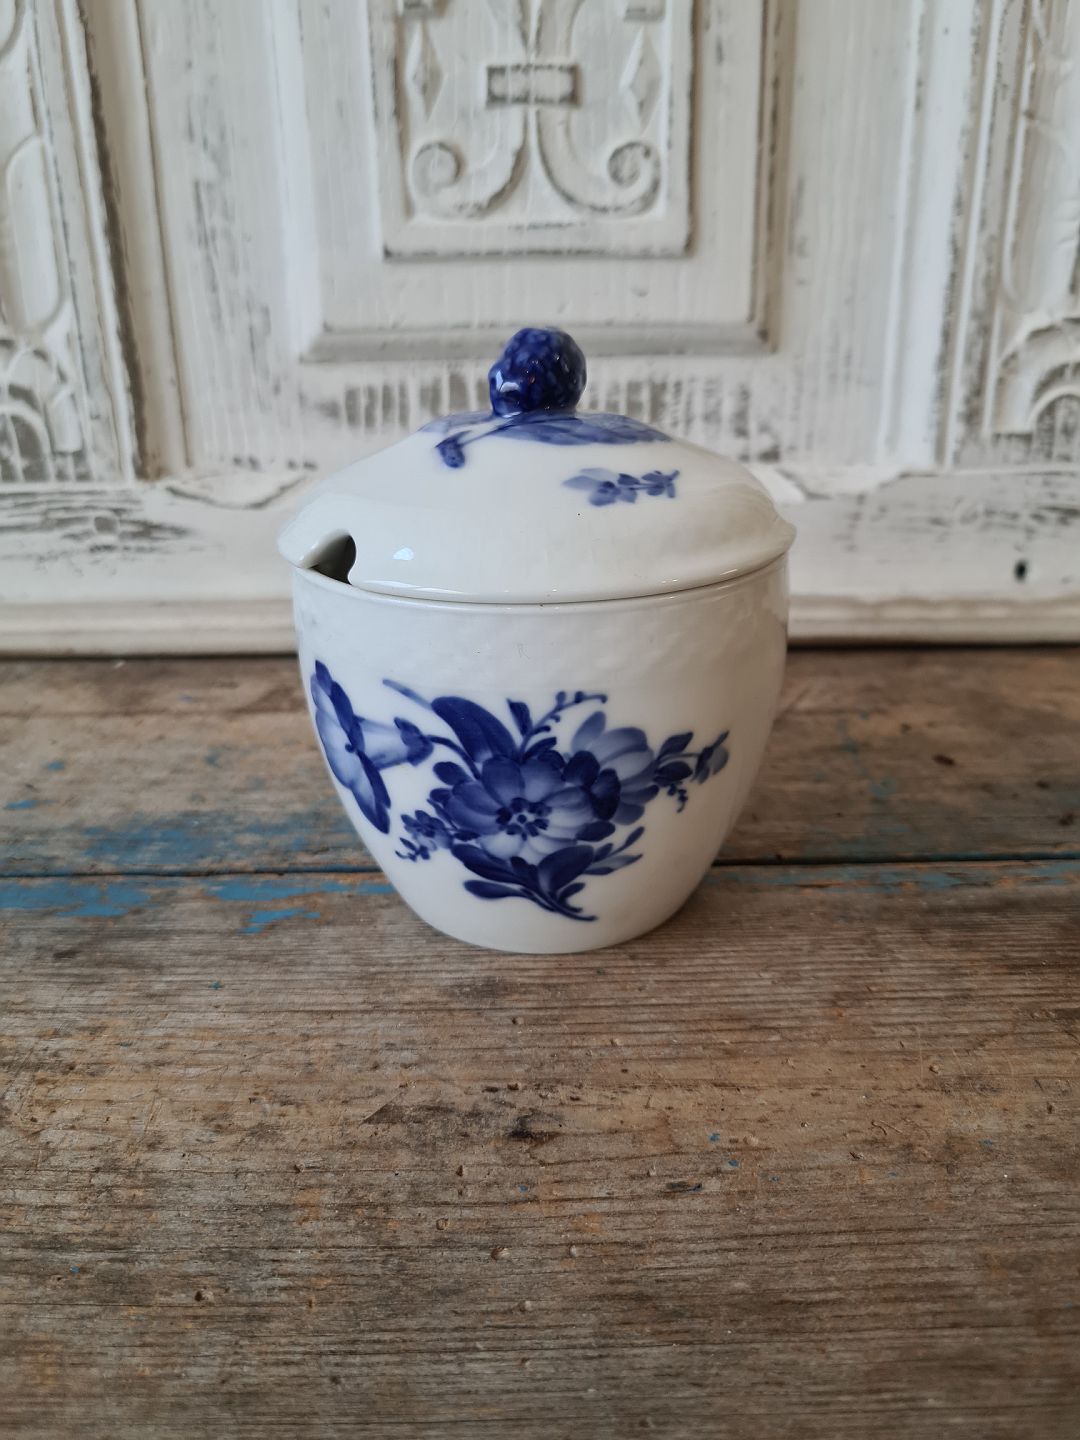 KAD ringen - Royal Copenhagen Blue Flower jam jar with lid No